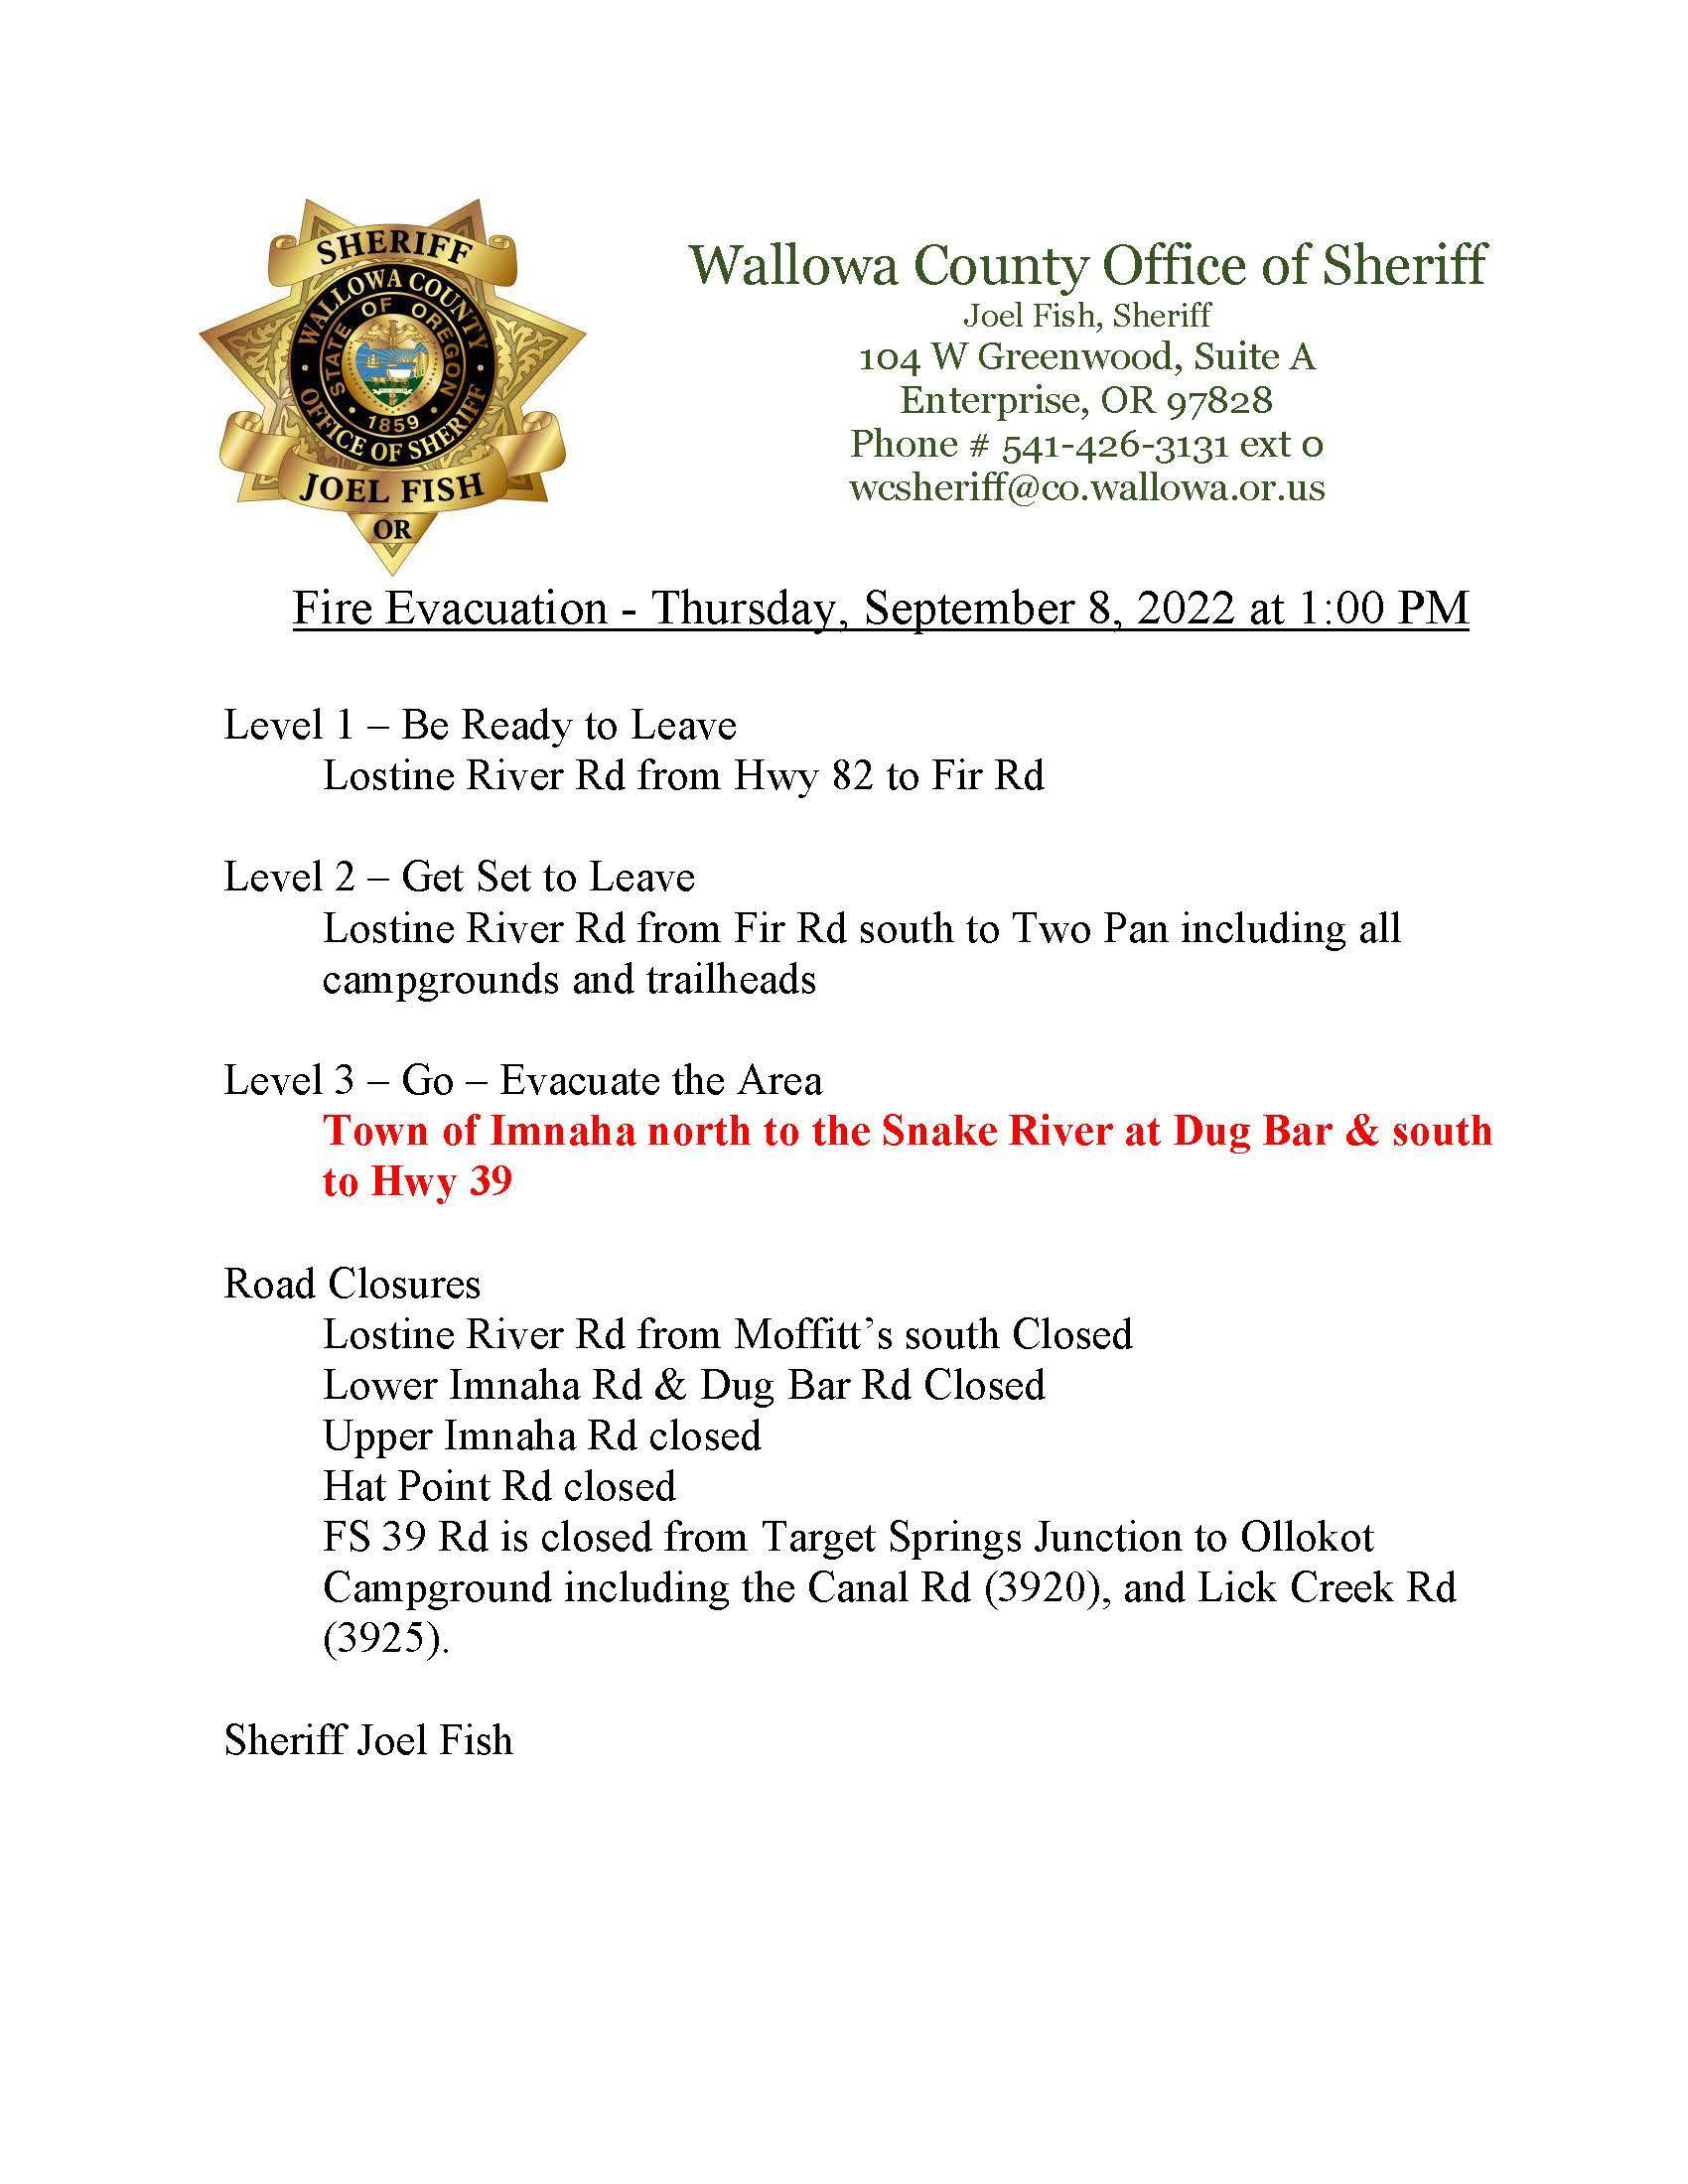 Wallowa County Fire Evacuations - 09/08/2022